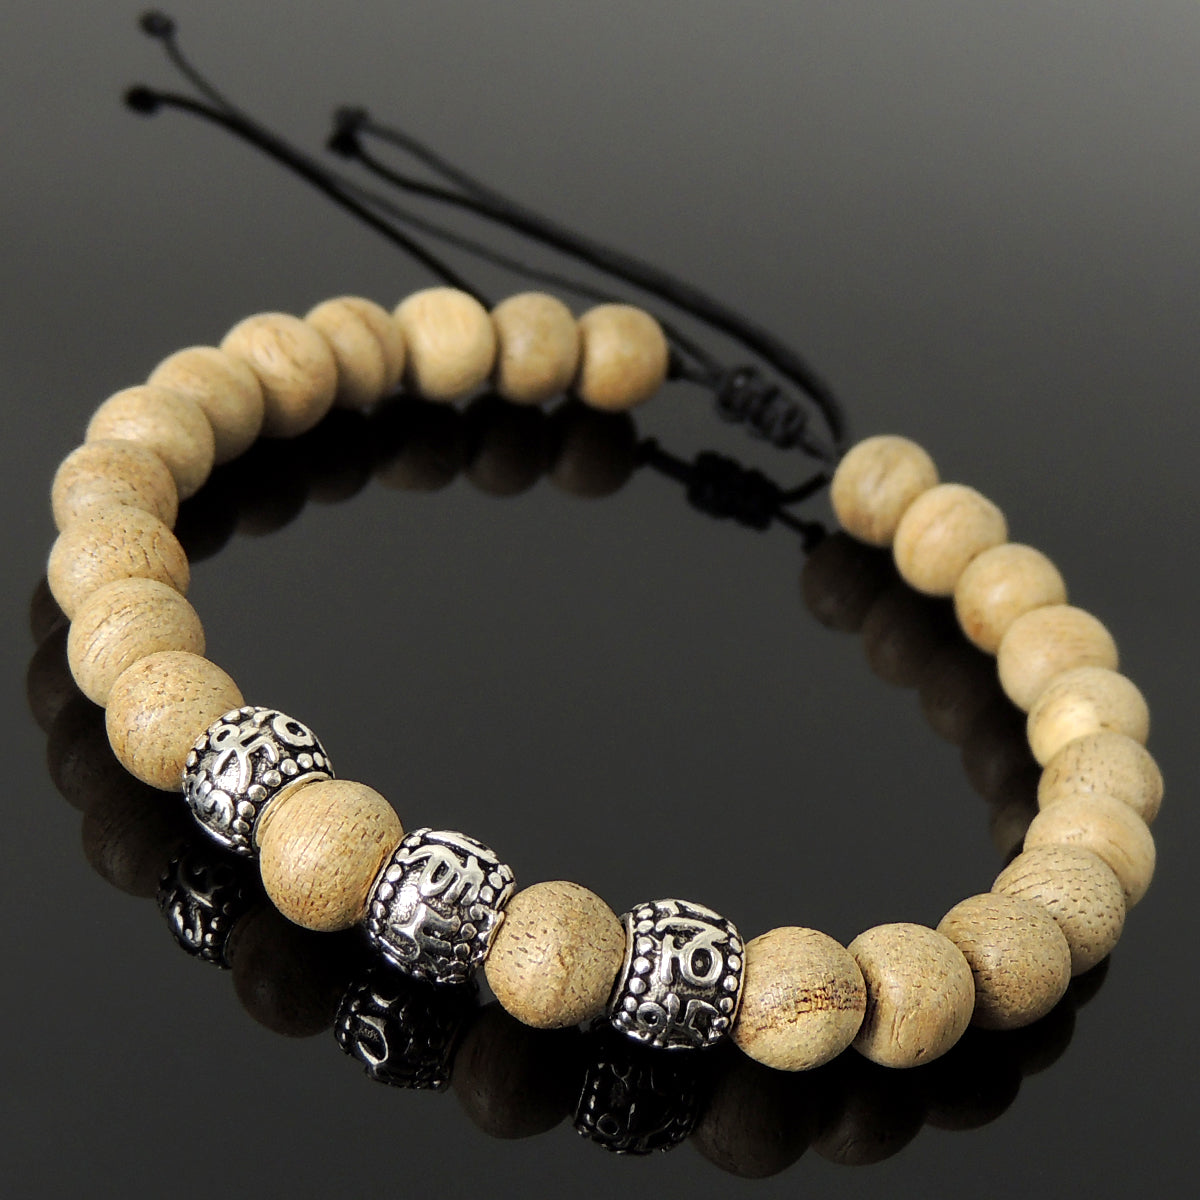 Handmade Meditation Mala Buddhism Jewelry Braided Bracelet - Mens Womens Longevity, Healing with 7mm Indonesia White Sand Agarwood, Adjustable Drawstring, S925 Sterling Silver Beads BR1711